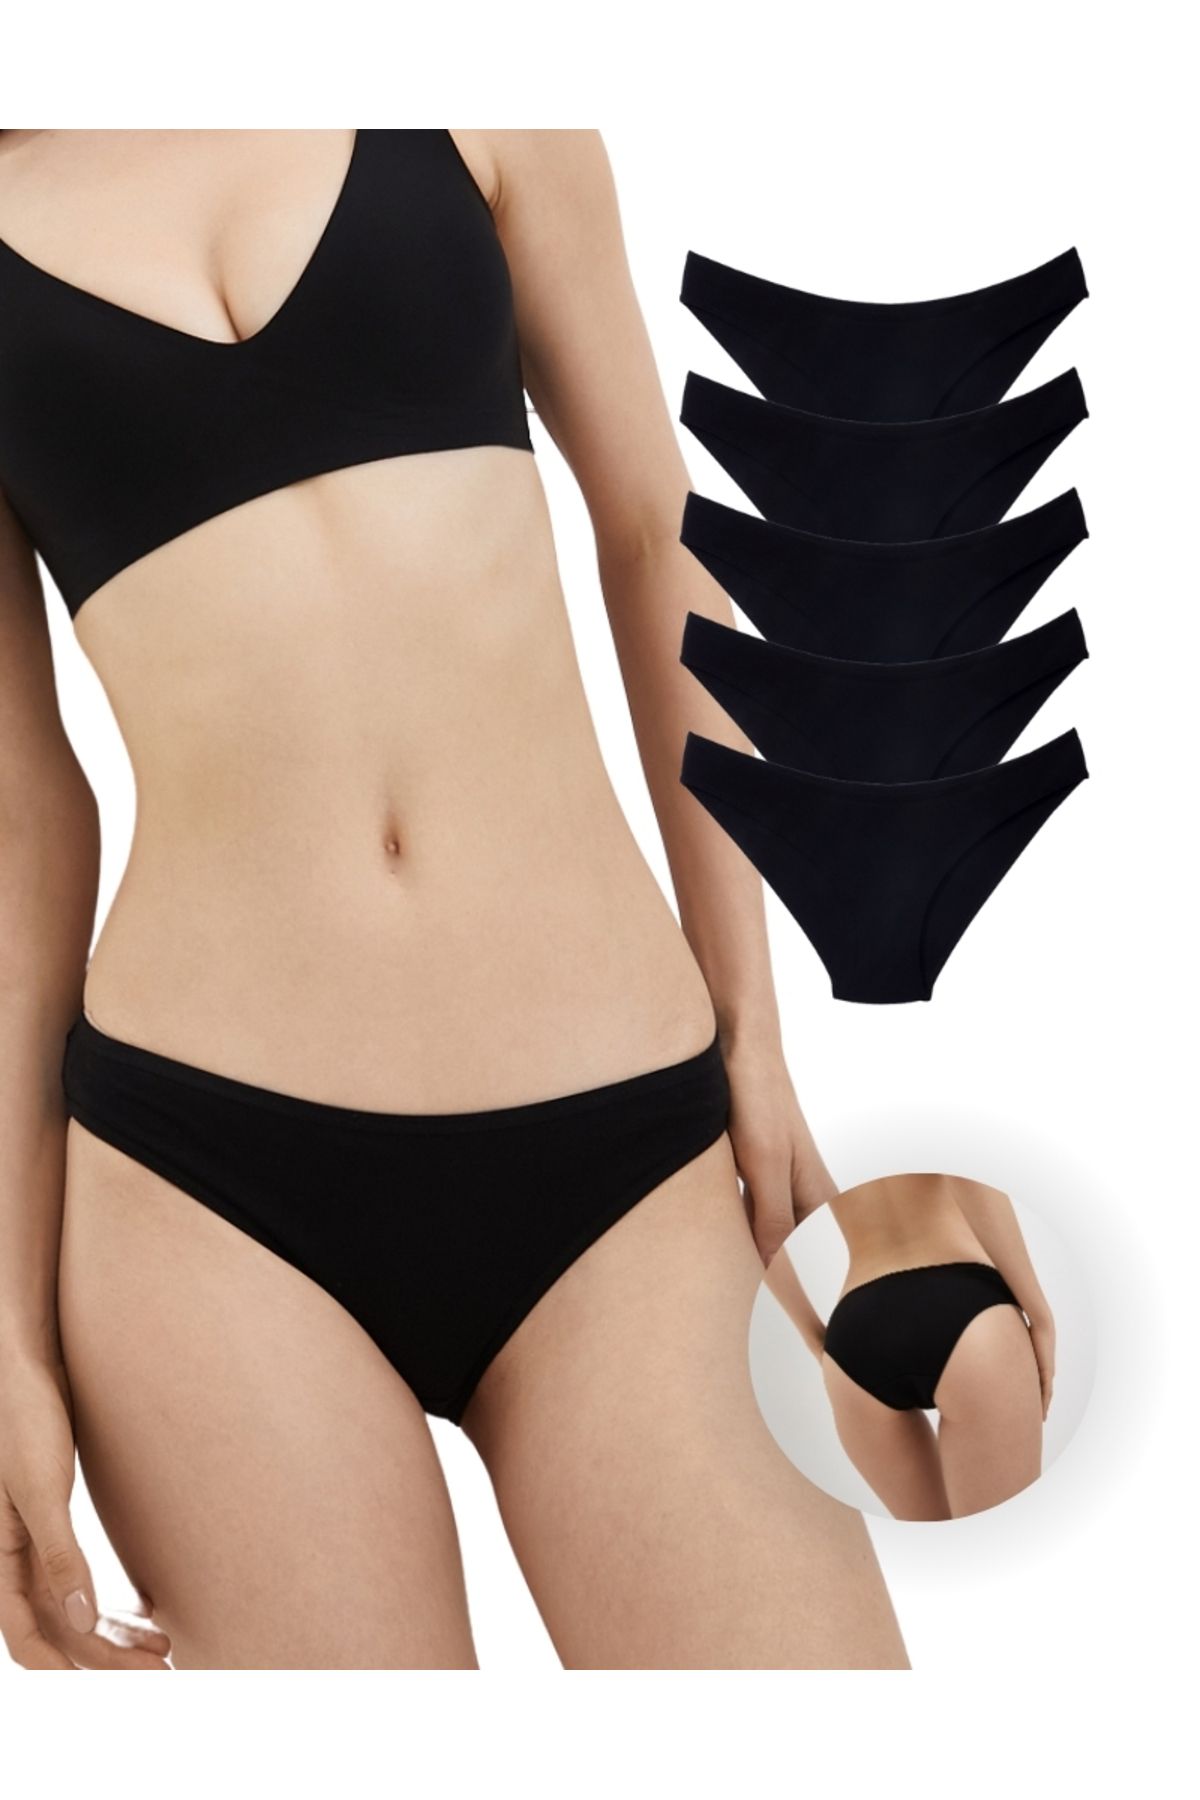 ALYA UNDERWEAR Kadın Bikini Kesim Pamuklu Külot - 5 Adet Siyah (S, M, L, XL, 2XL)